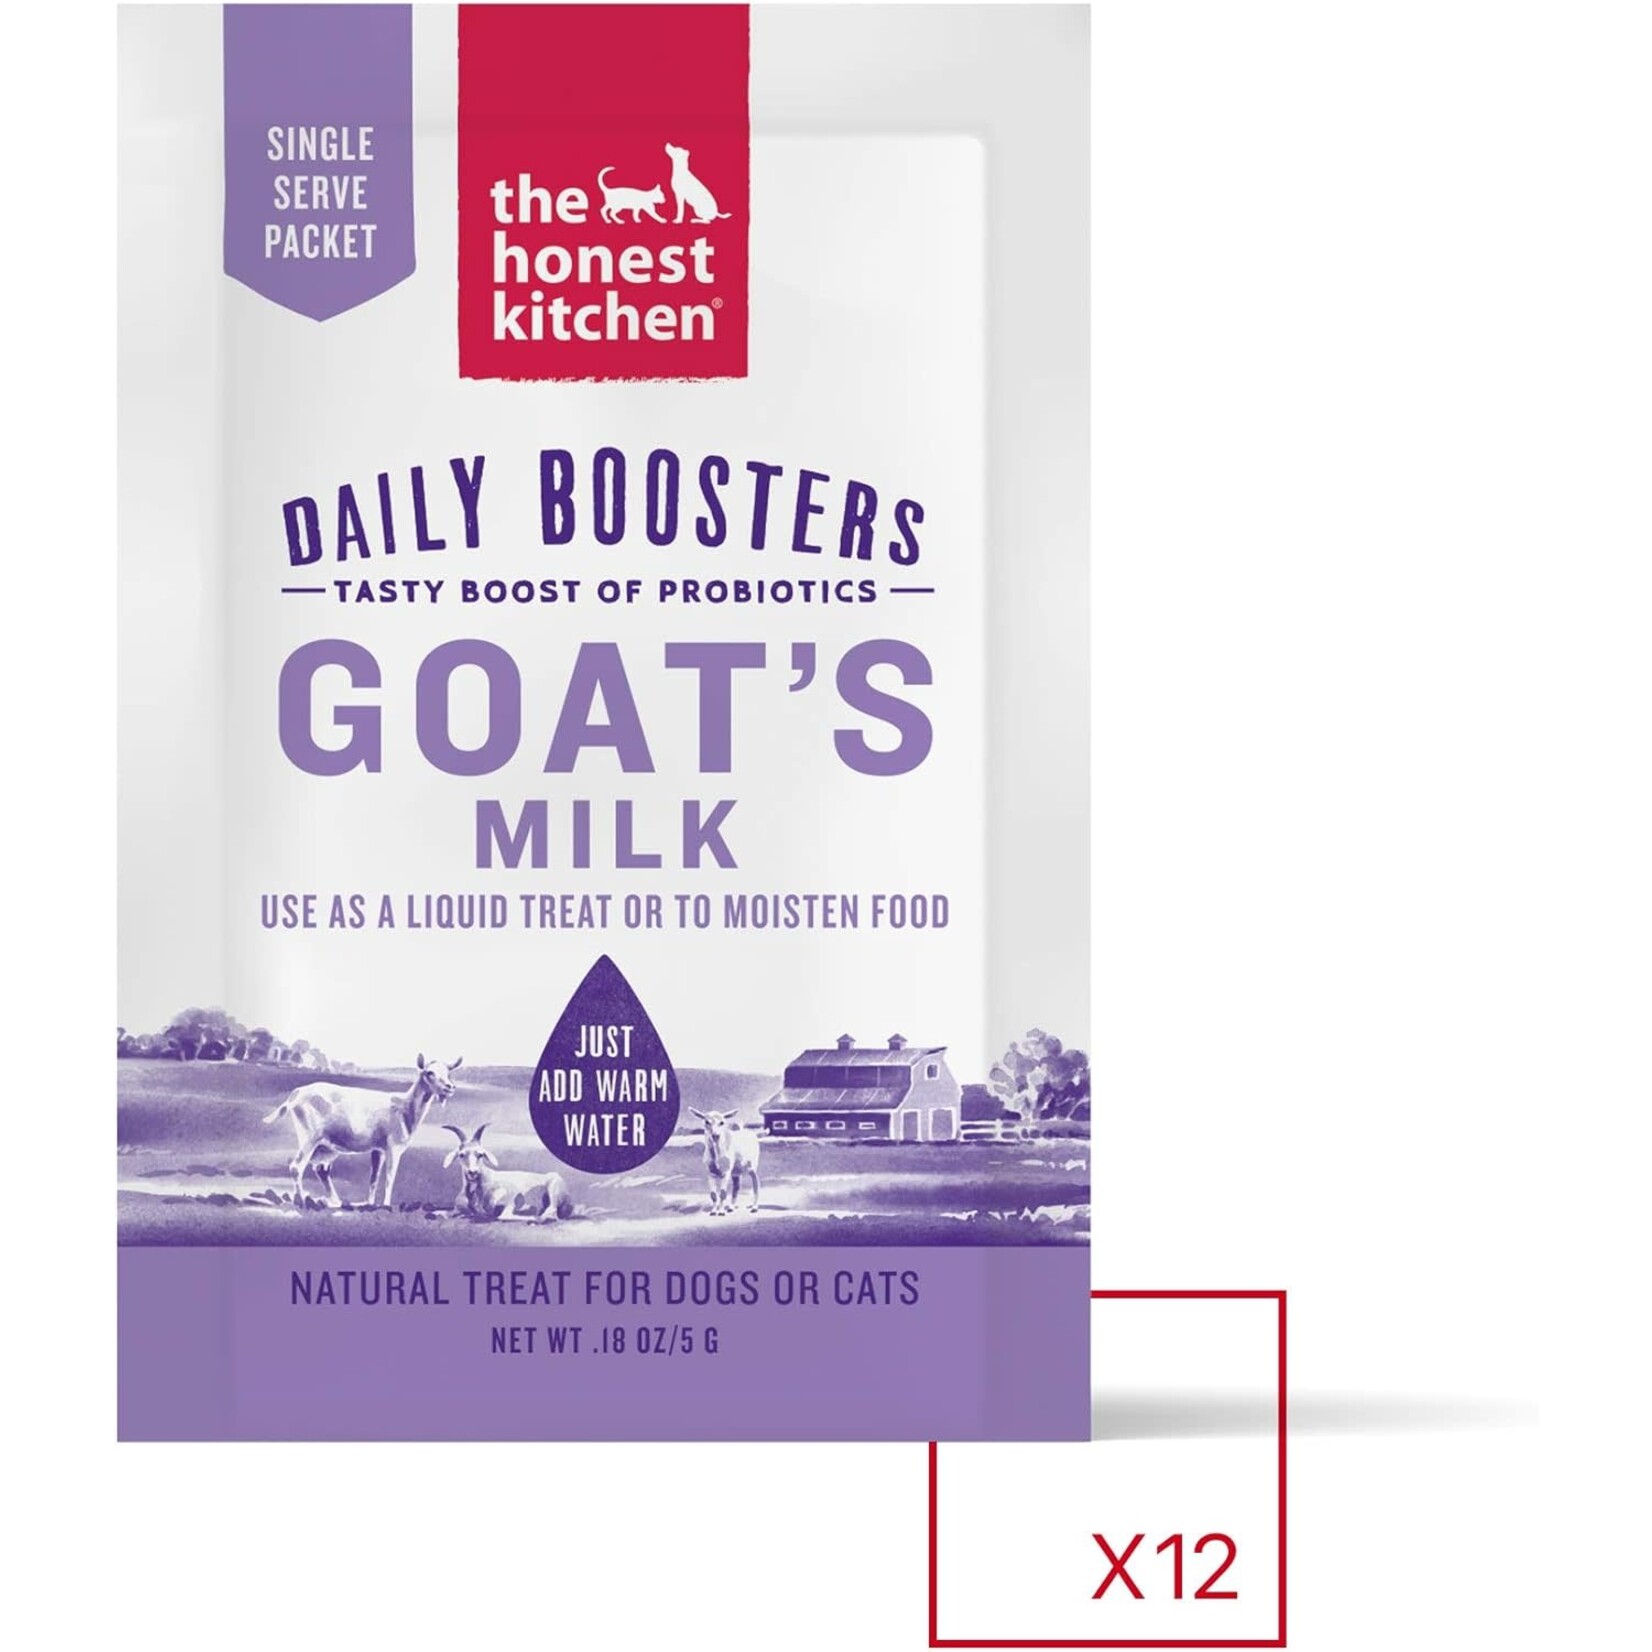 Honest Kitchen HK Daily Boosters Goats Milk Box 12/5g